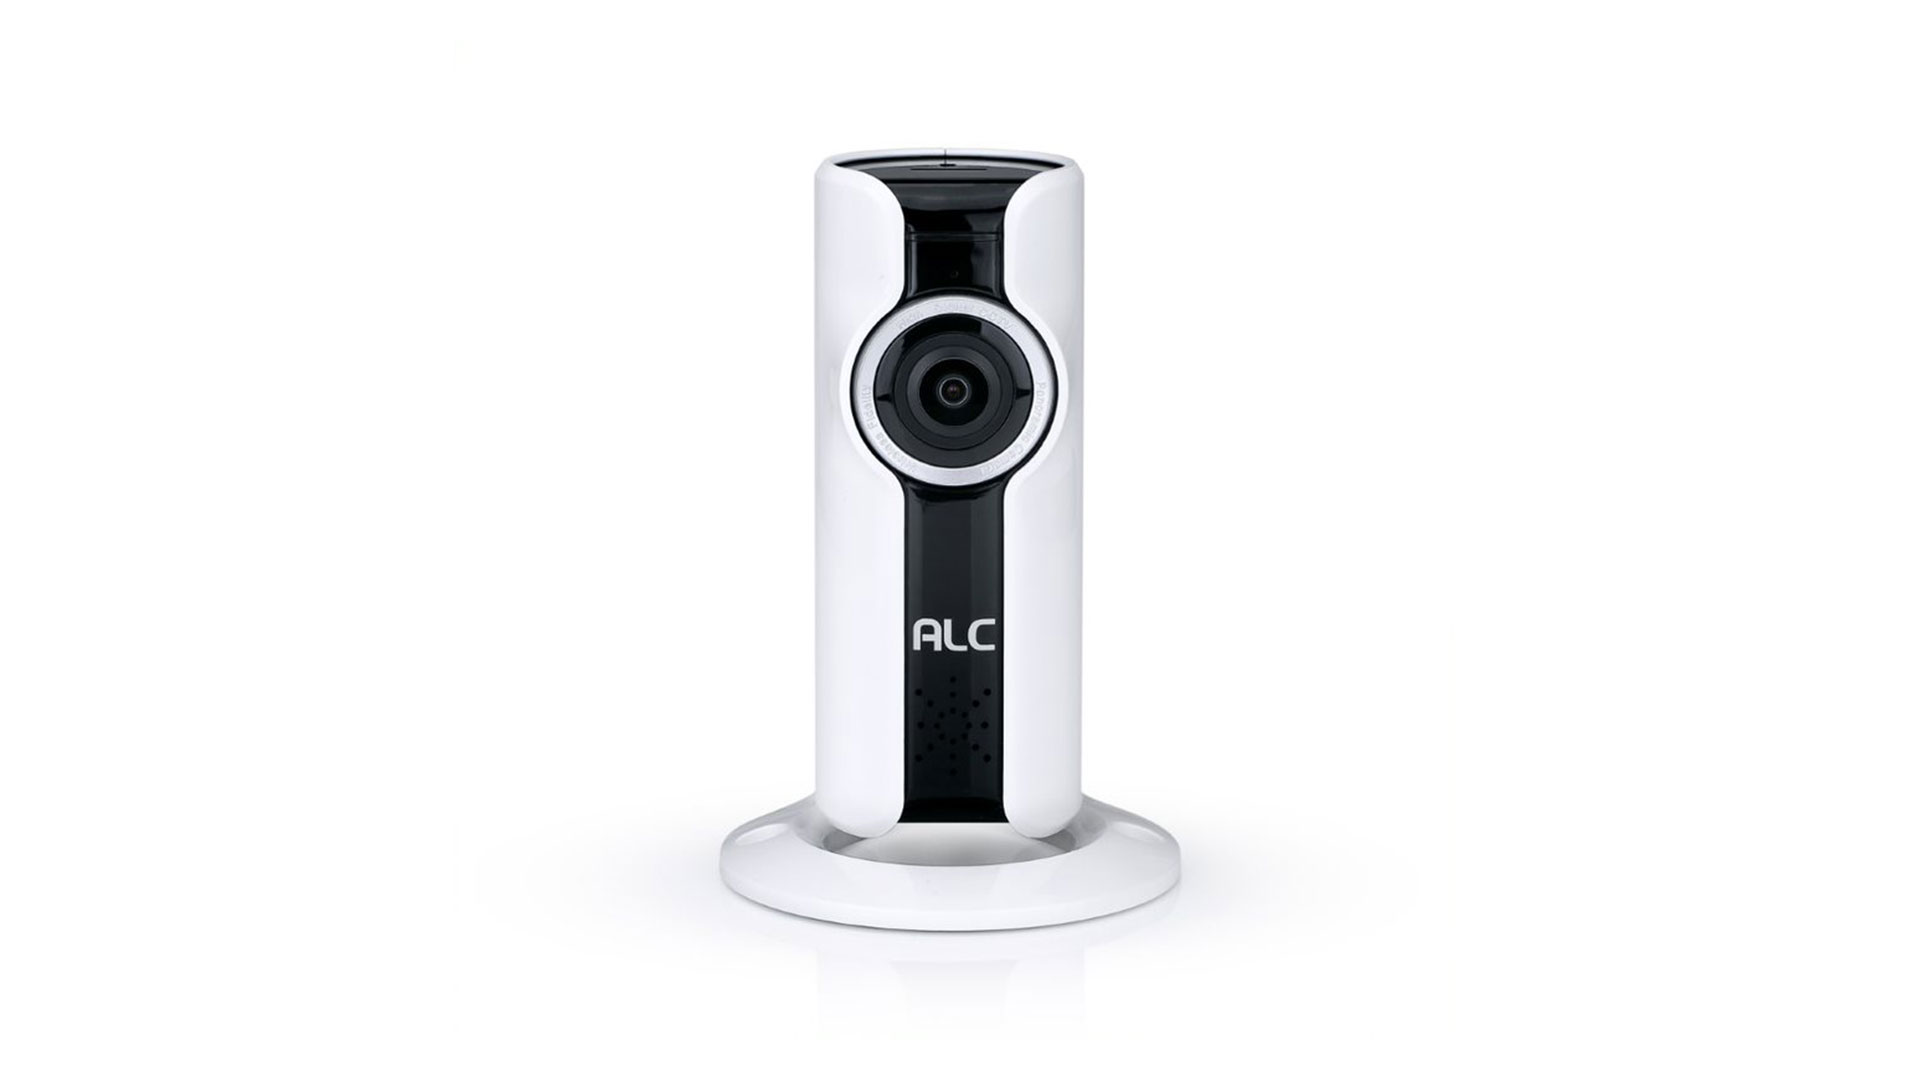 ALC Wireless Indoor Panoramic HD Wi-Fi Camera